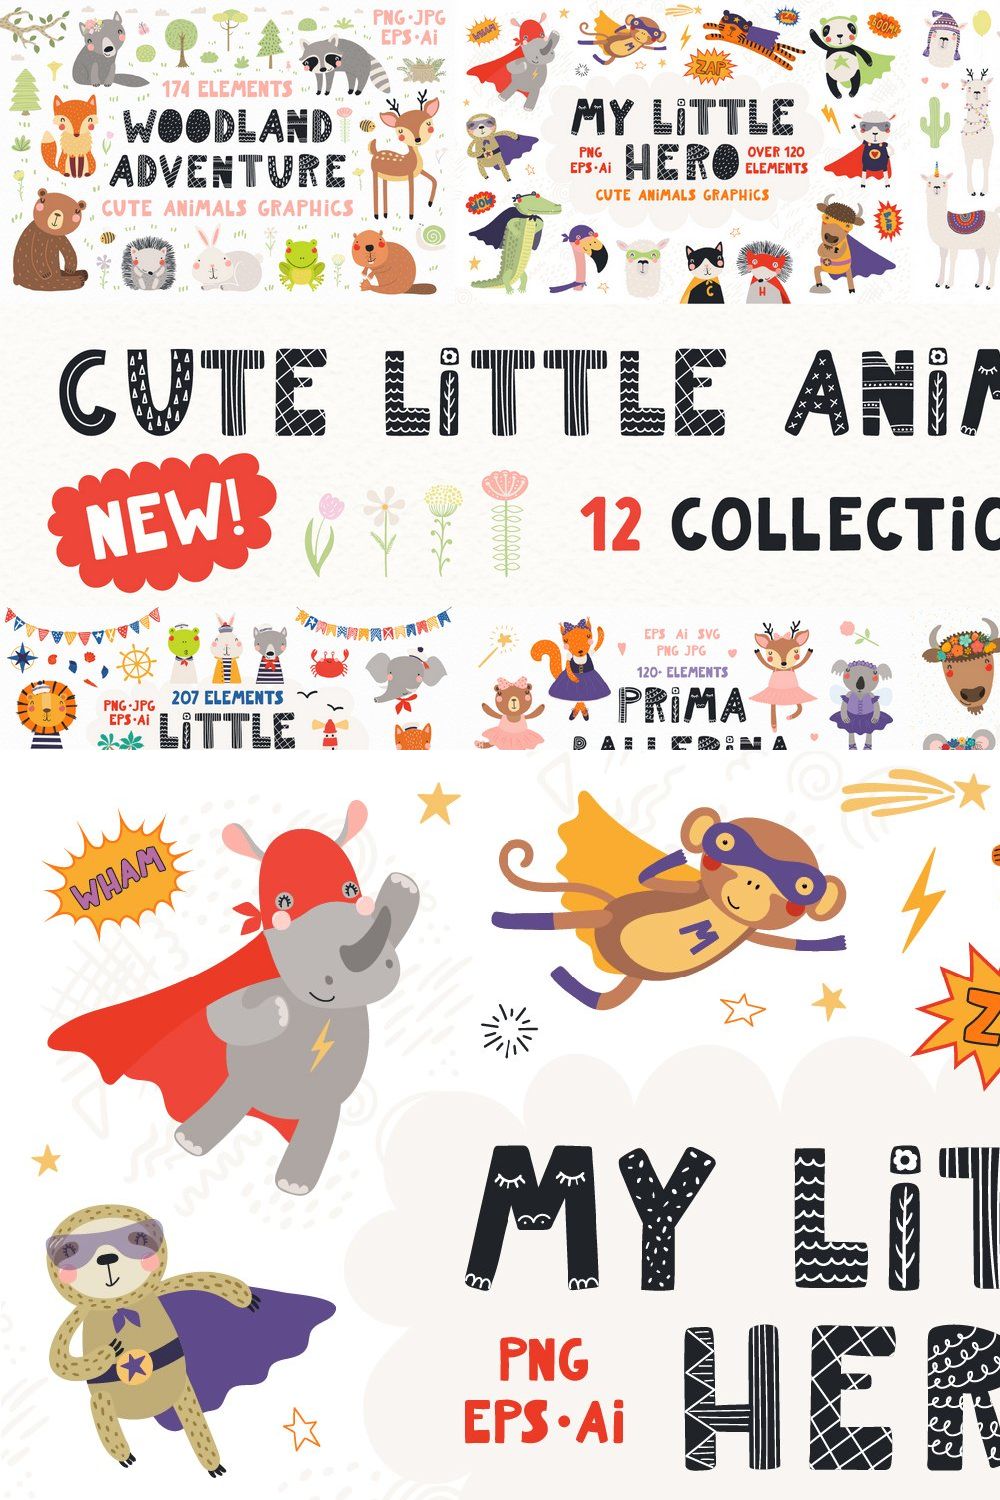 Cute Little Animals Graphic Bundle 2 pinterest preview image.